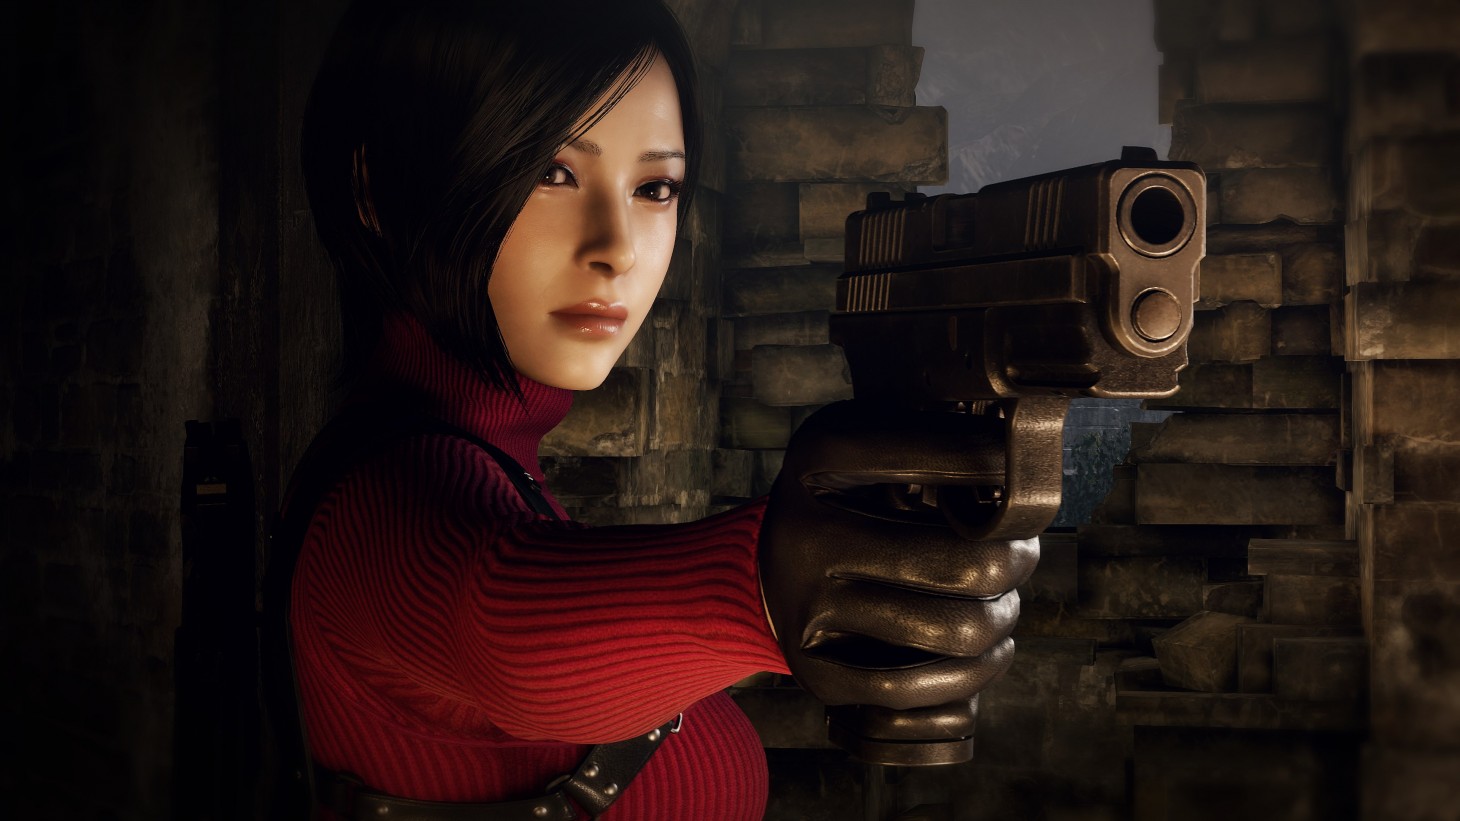 Resident Evil 4 Remake Announces Separate Ways DLC Releasing Next